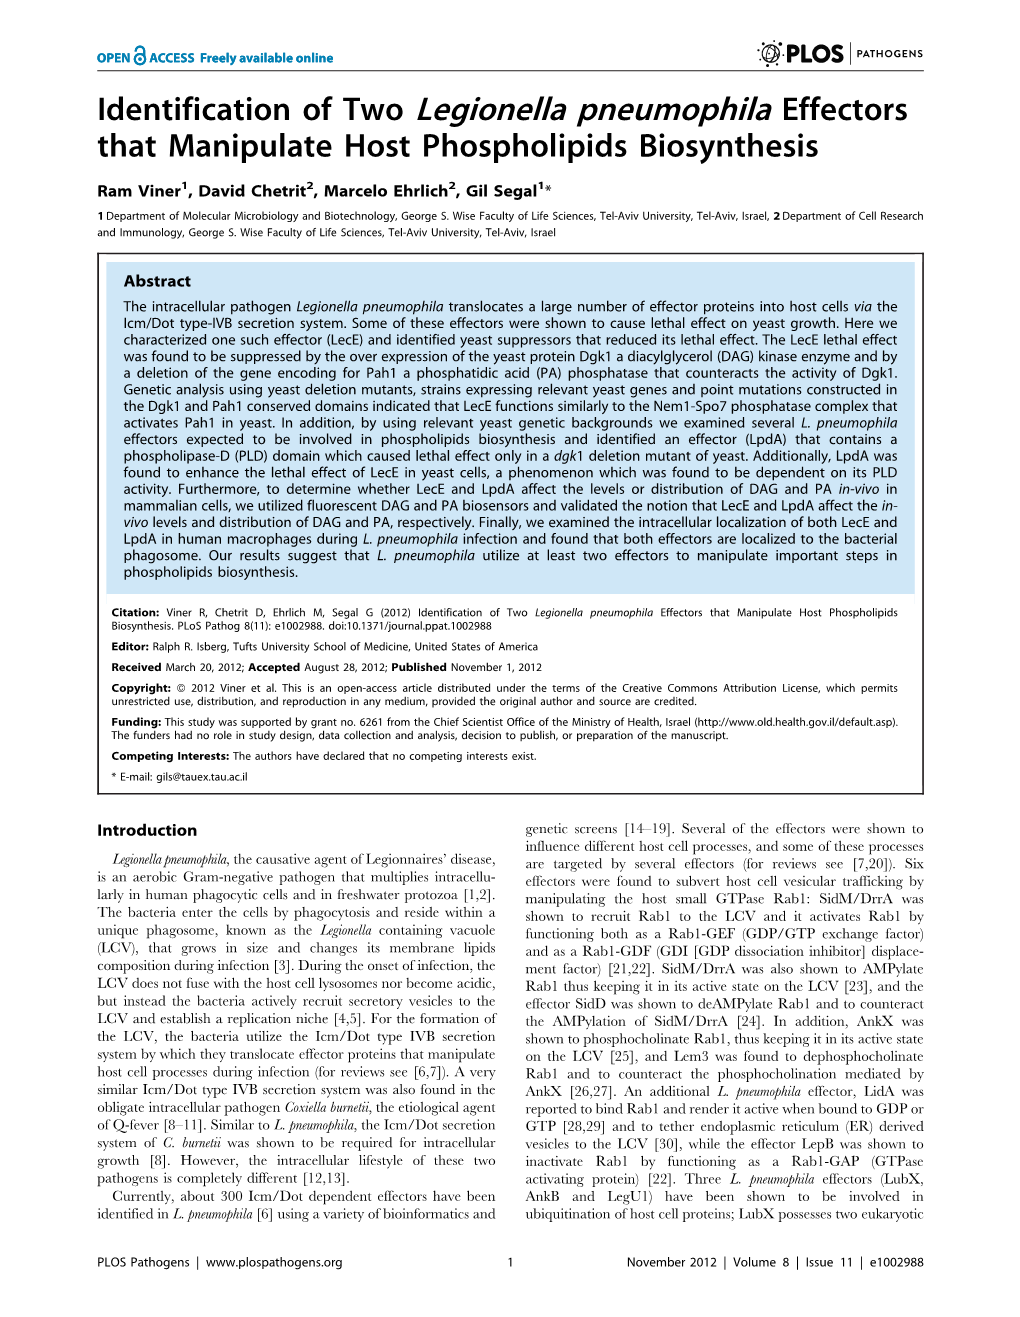 Identification of Two Legionella Pneumophila Effectors That Manipulate Host Phospholipids Biosynthesis